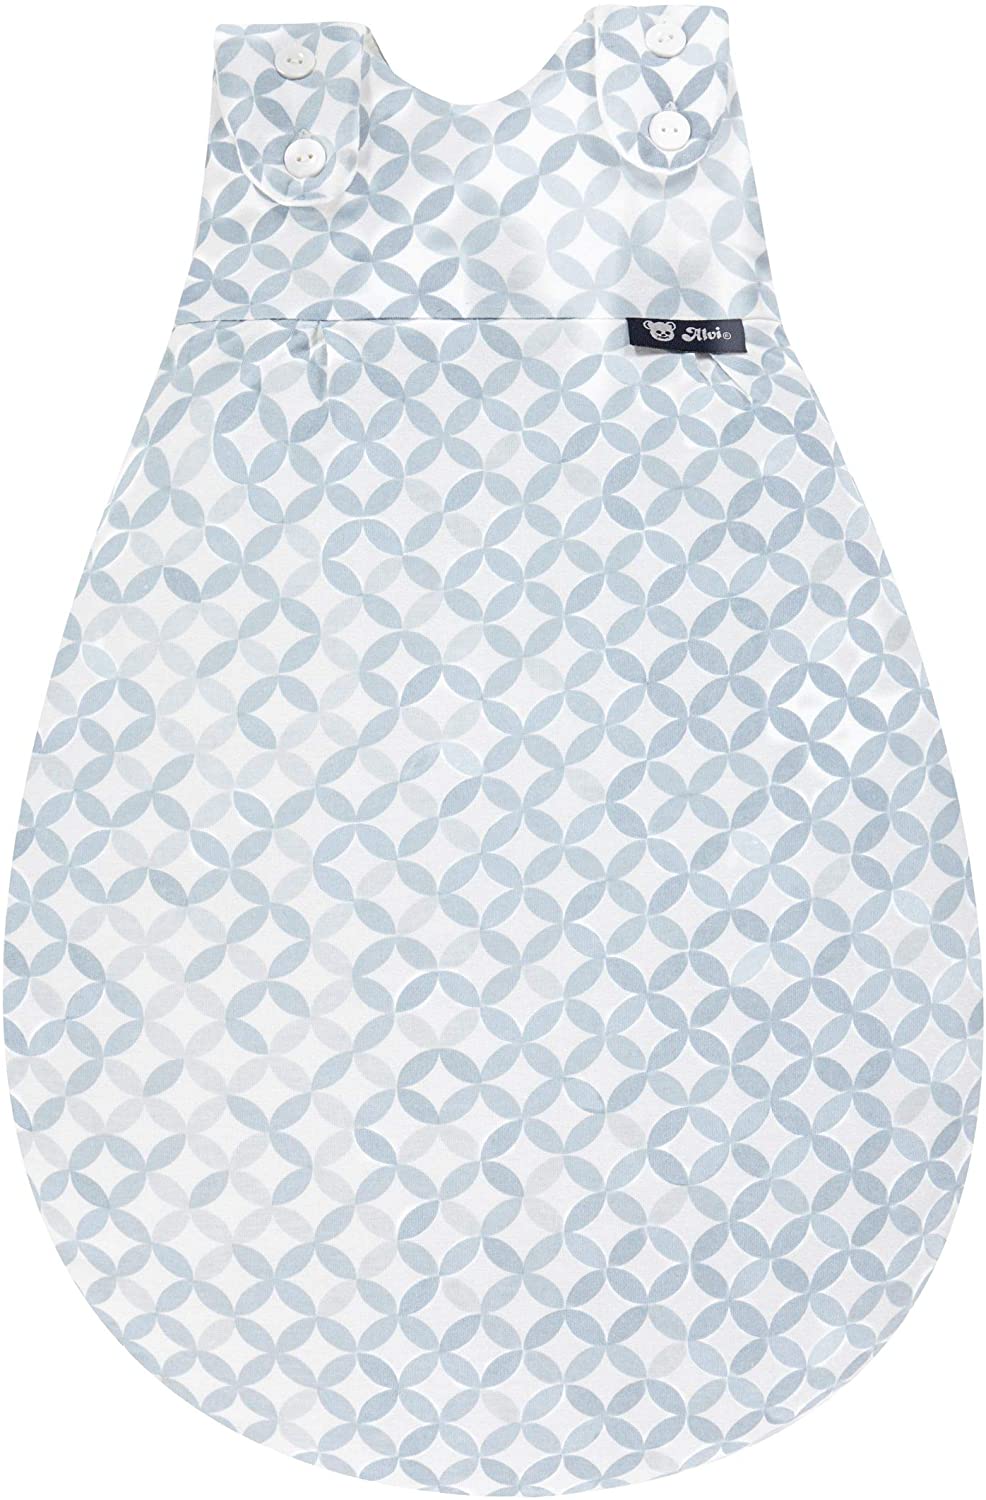 Alvi Baby Mäxchen Sleep Bag Exclusive Baby Sleeping Bag allows for Growth & Breathable Children\'s Sleeping Bag Washable Lightweight, Sleeveless